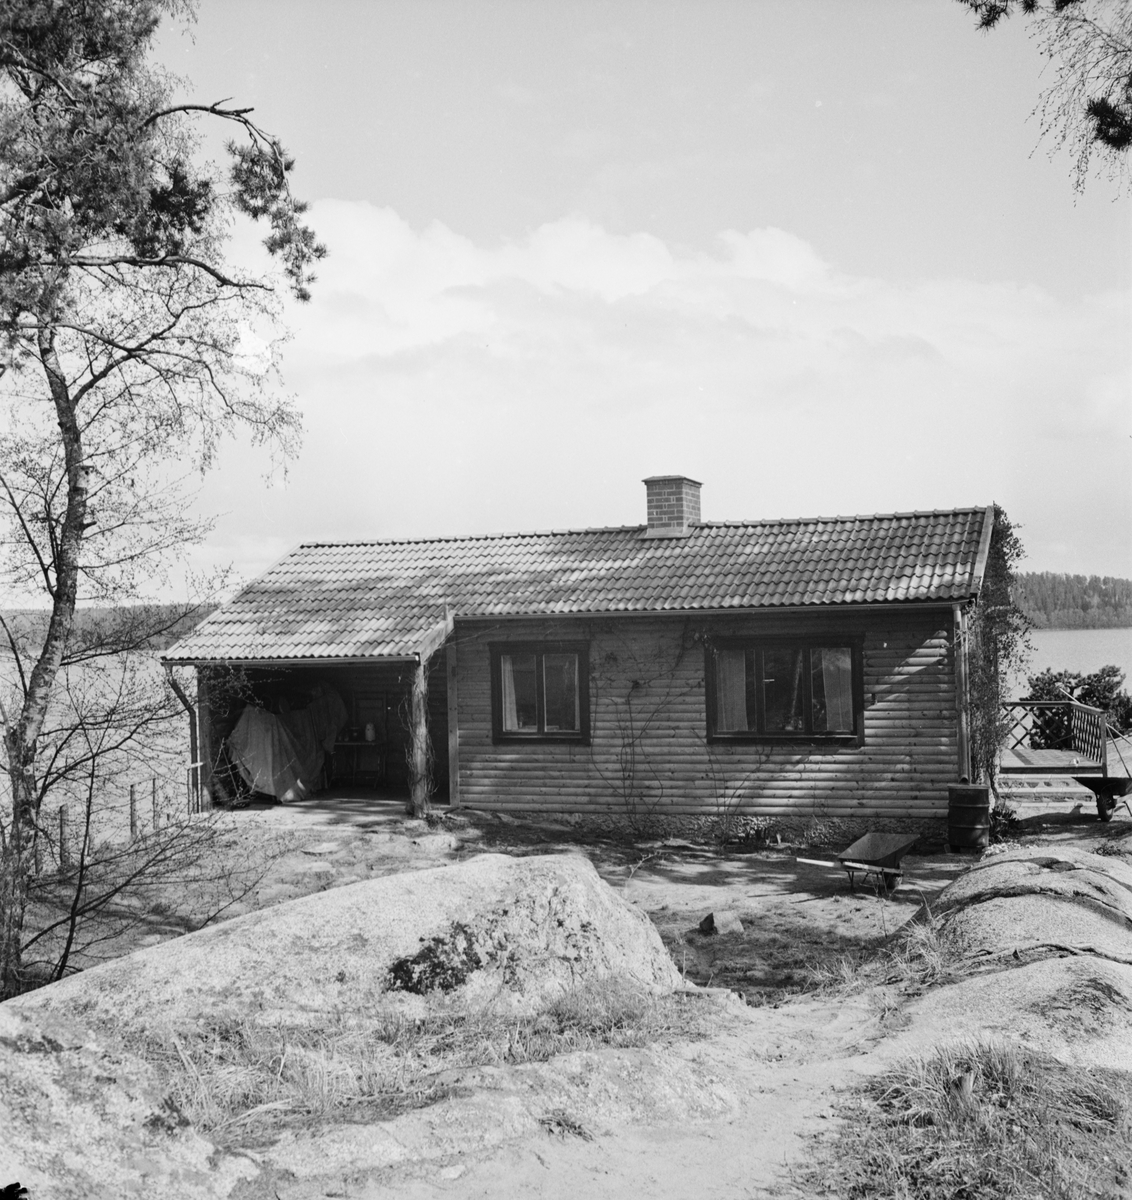 Urmakare Hemlins sommarstuga vid Ekoln, Uppland 1953